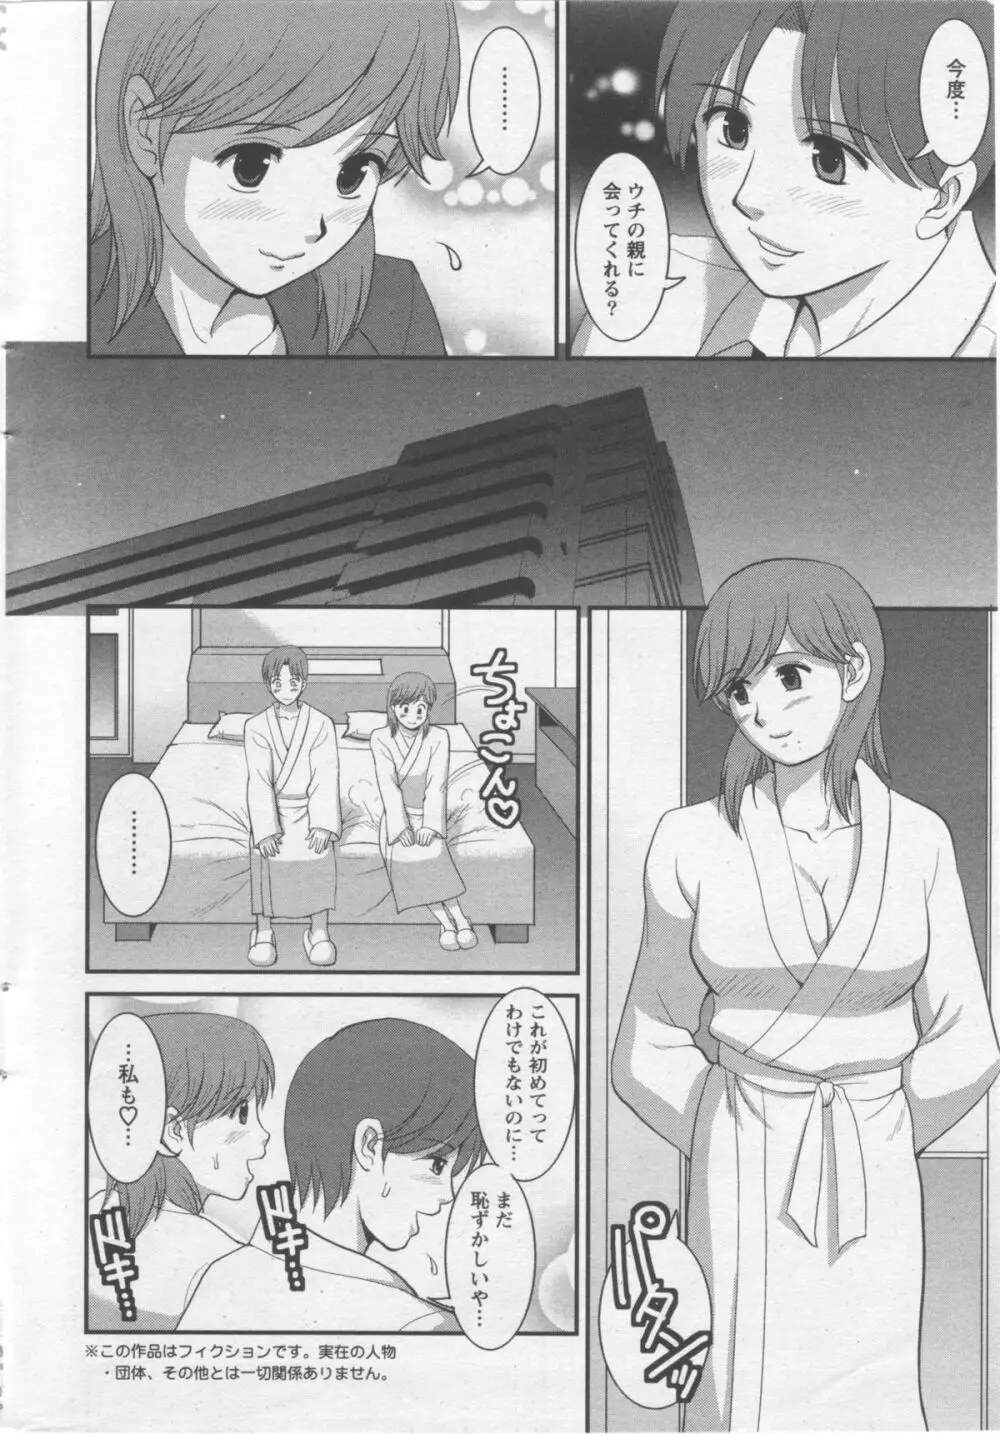 Haken no Muuko-san 10 11ページ